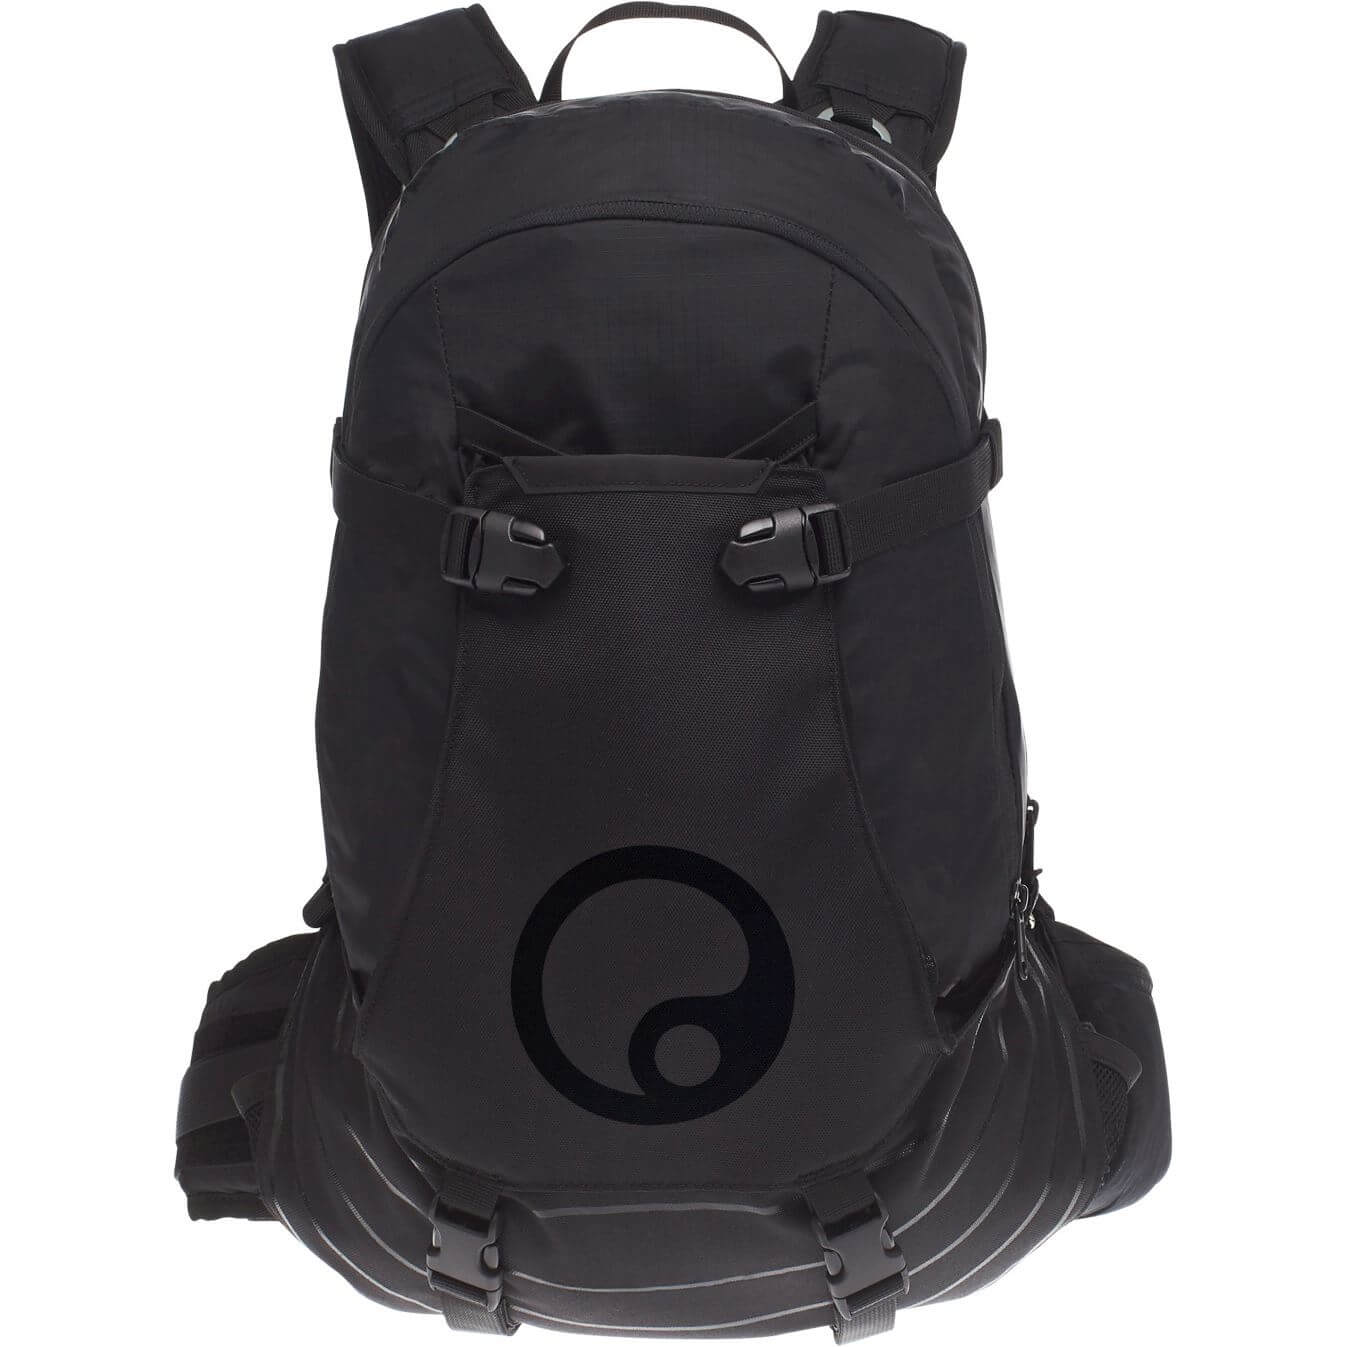 Ergon Backpack BA3 E -Protect - Black - Enduro All -Mountain - 17L - 1060G